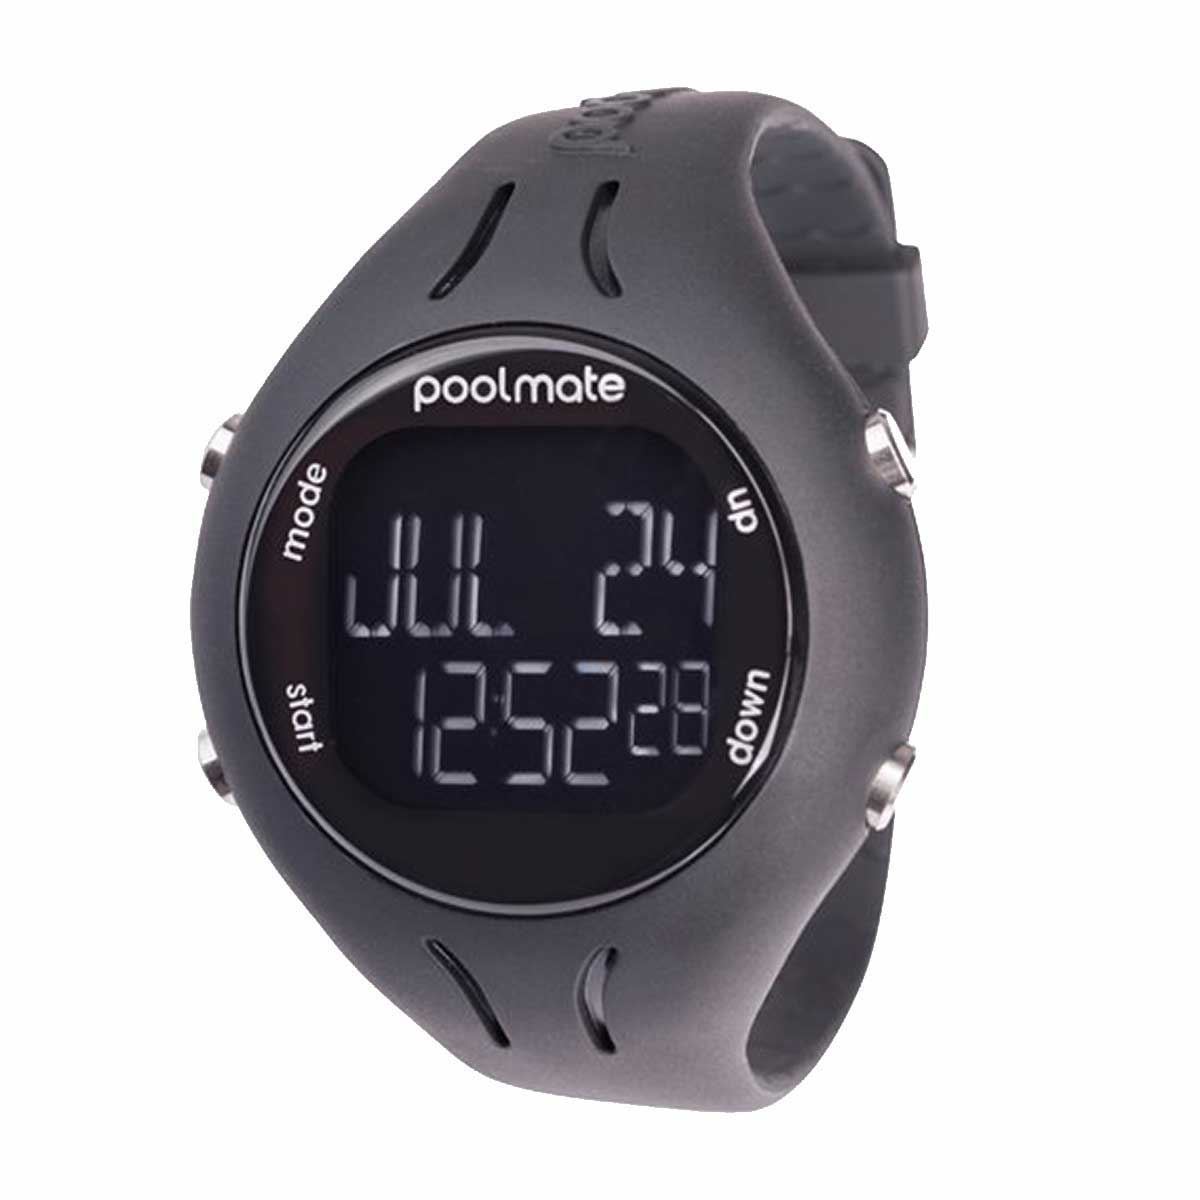 Swimovate PoolMate2 Swimming Watch - Black